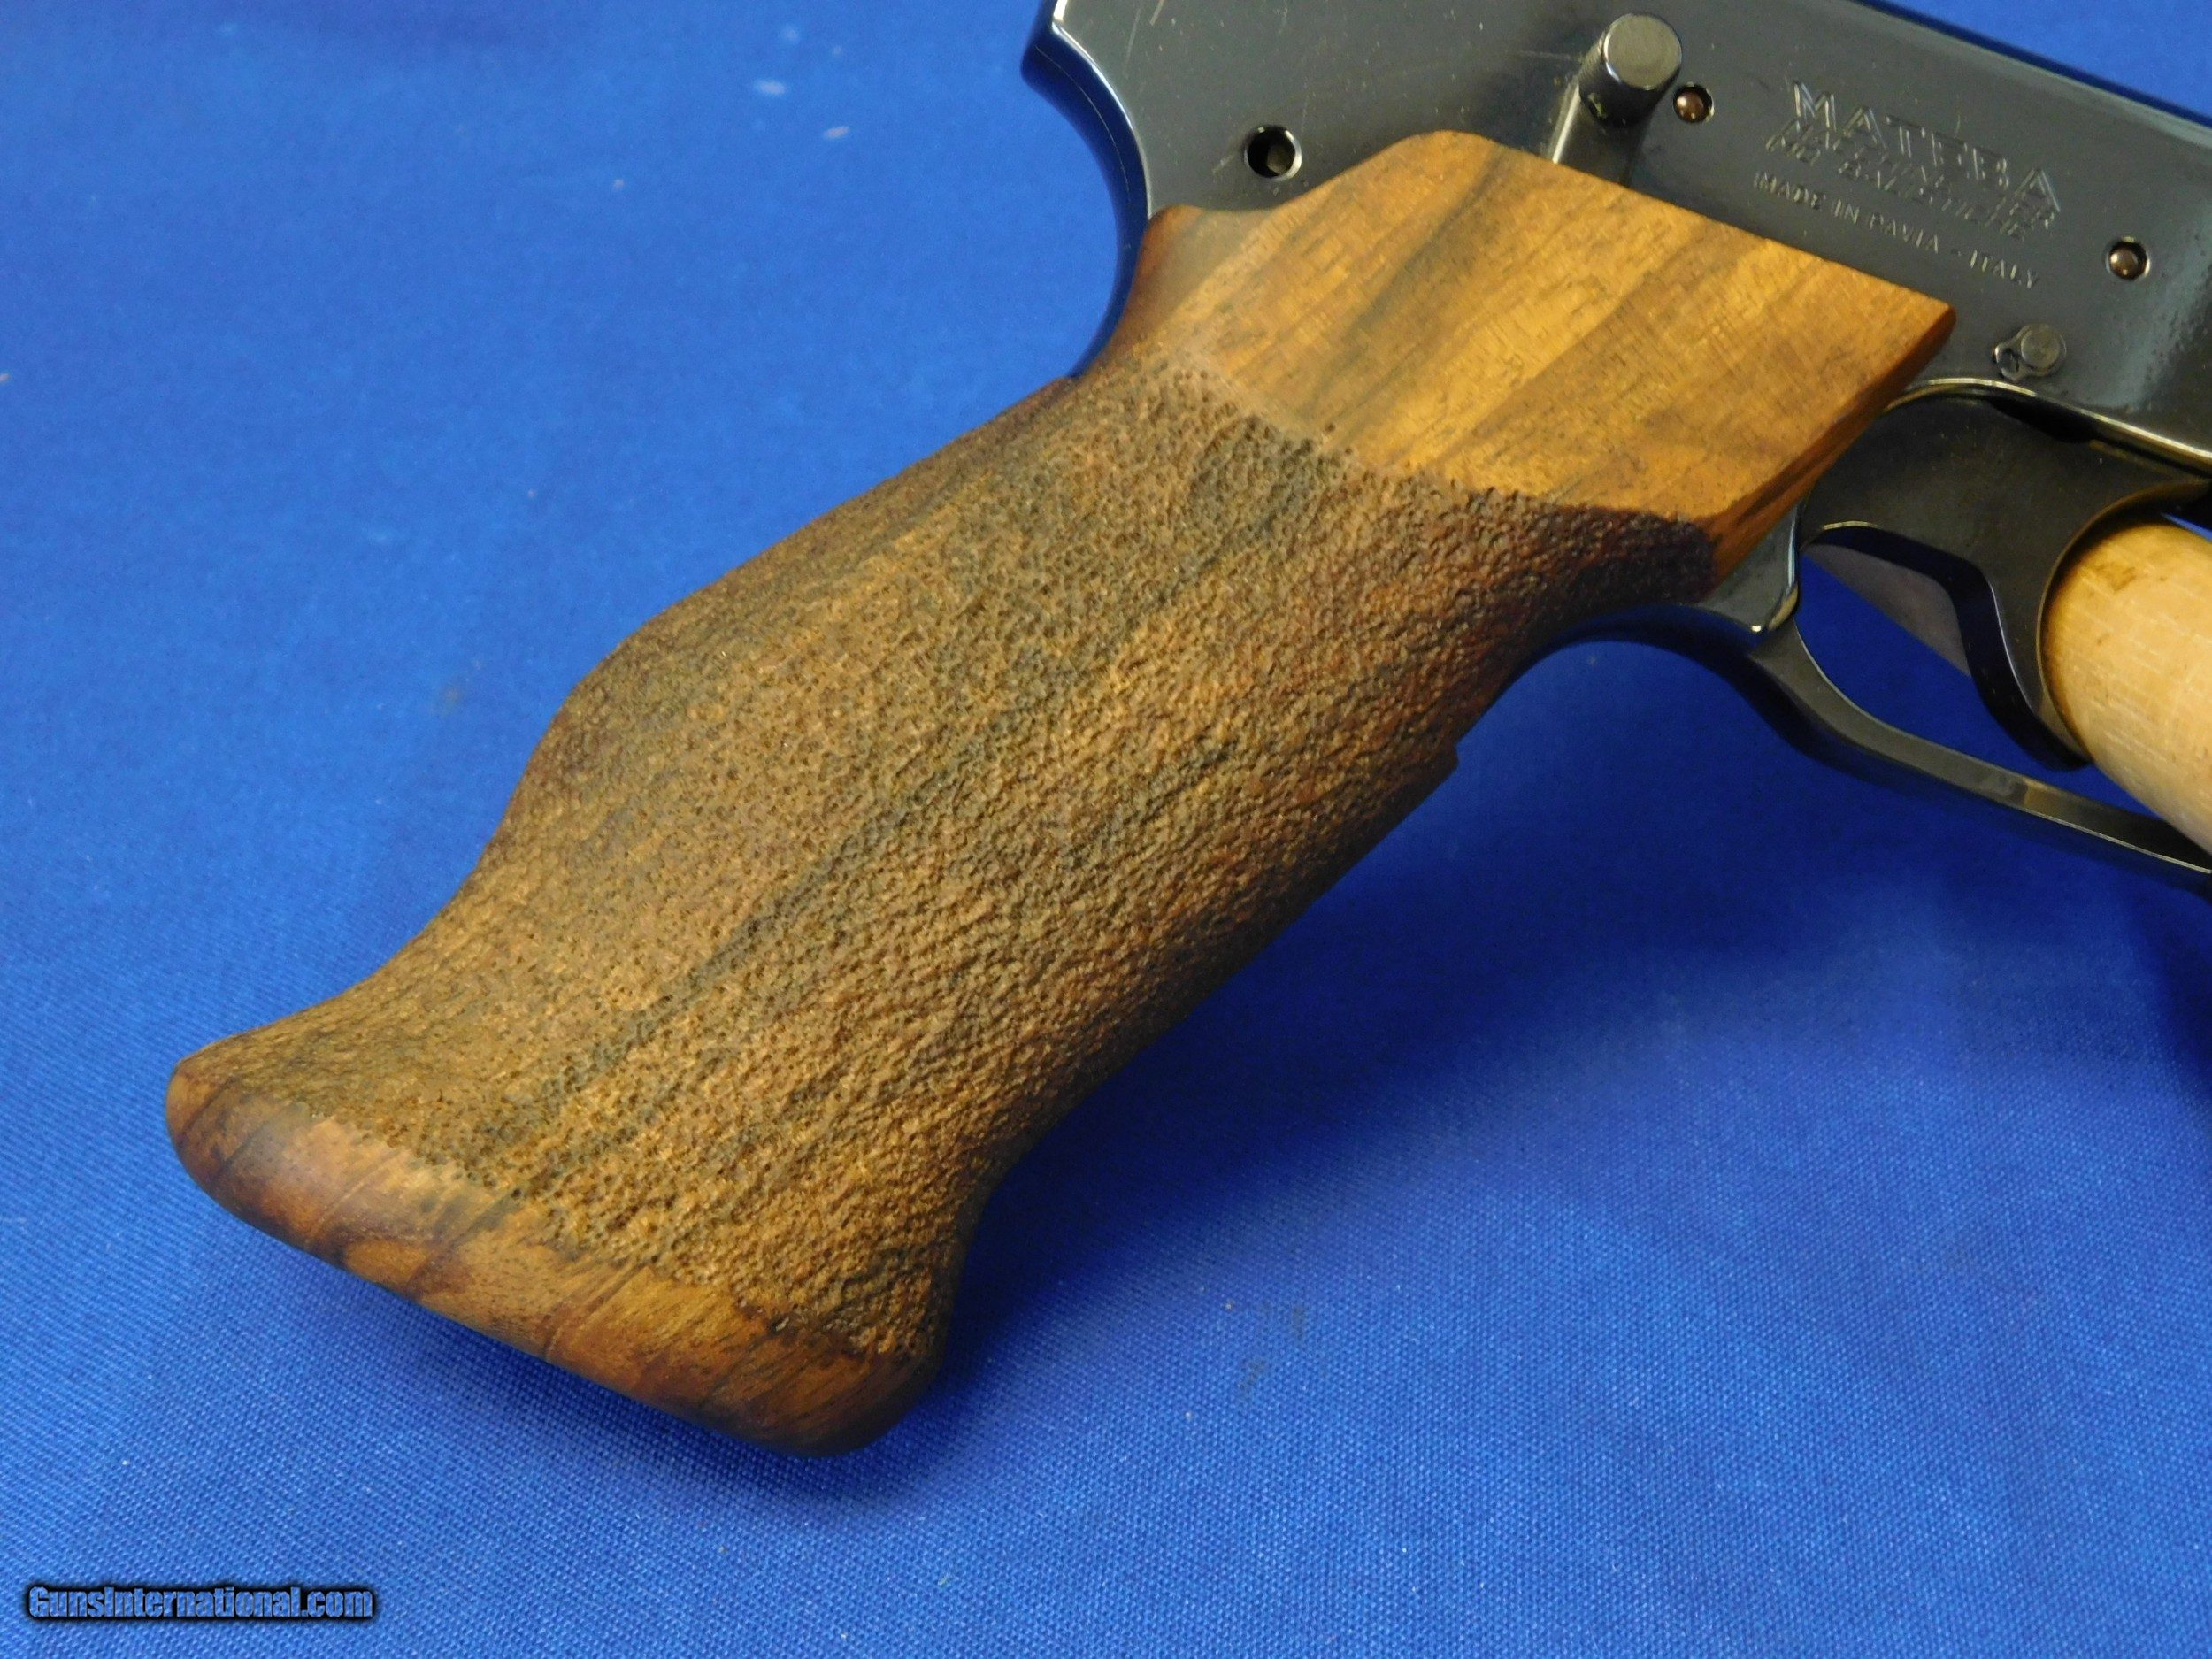 Mateba, MTR-8, Italian Revolver, .38 special, 465, I-783 - Historic  Investments